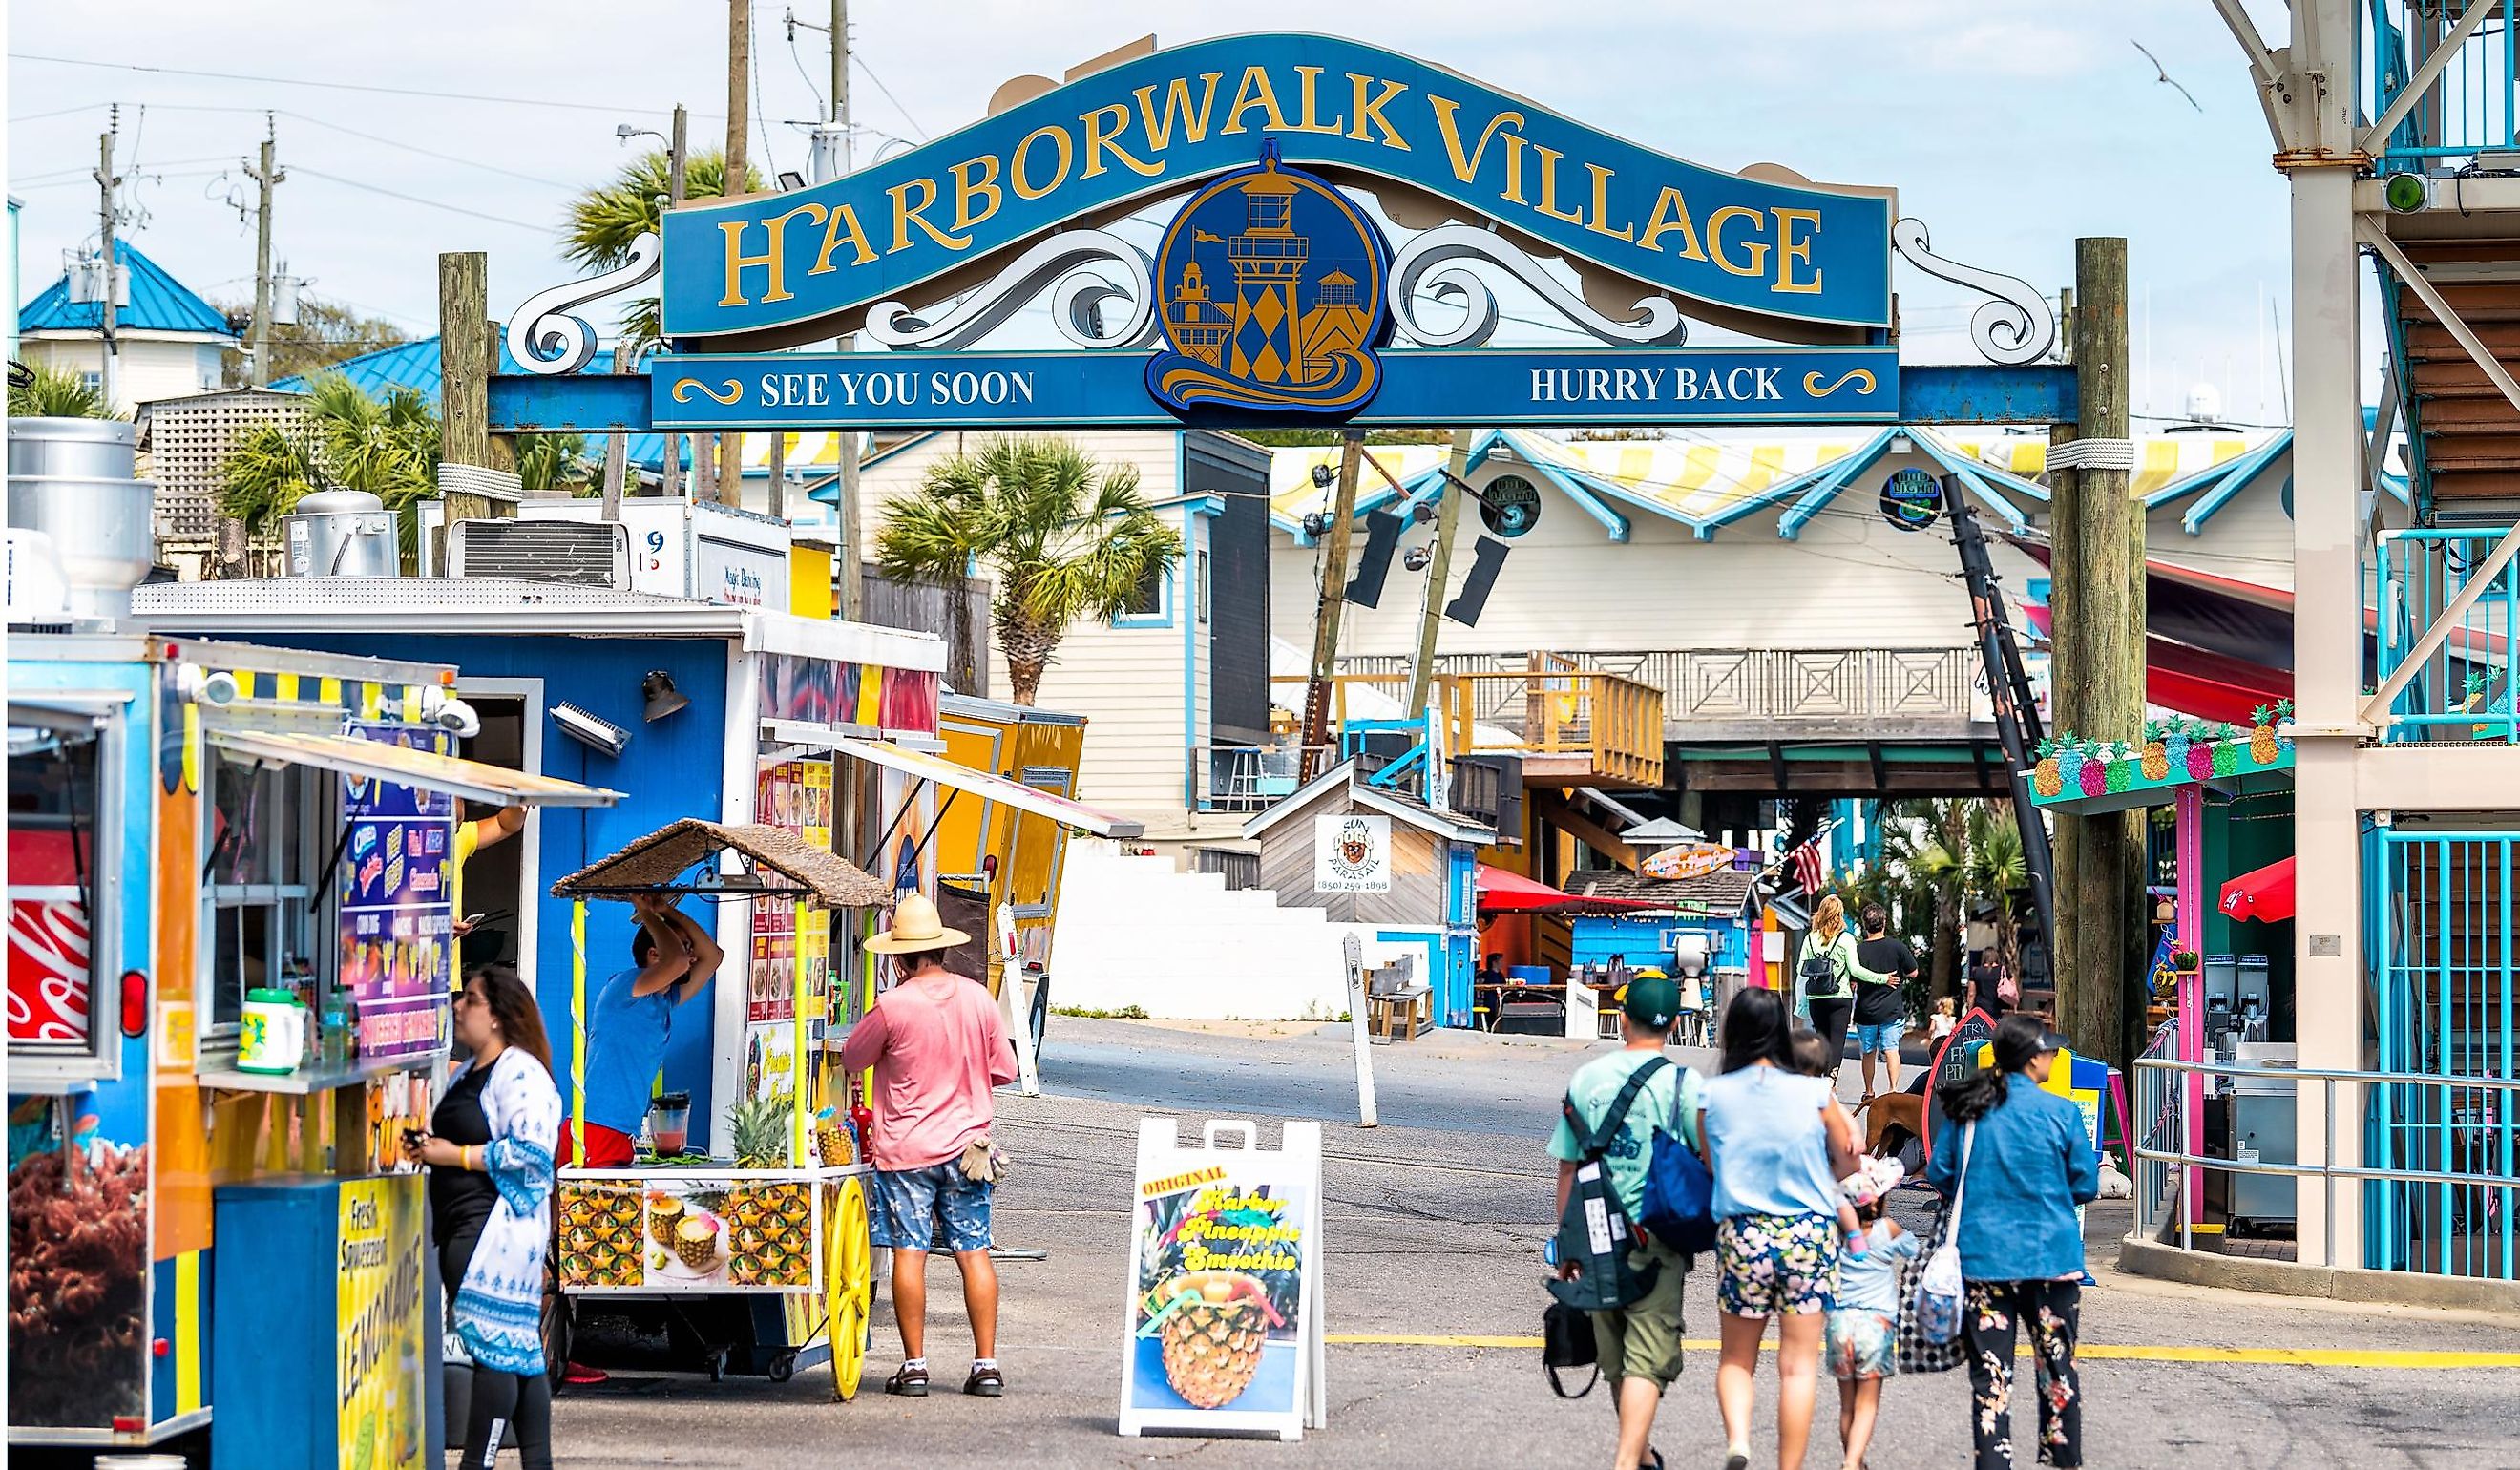 Sign for Harborwalk Village in Emerald Grande Coast in Florida Panhandle. Editorial Credit: Andriy Blokhin / Shutterstock.com